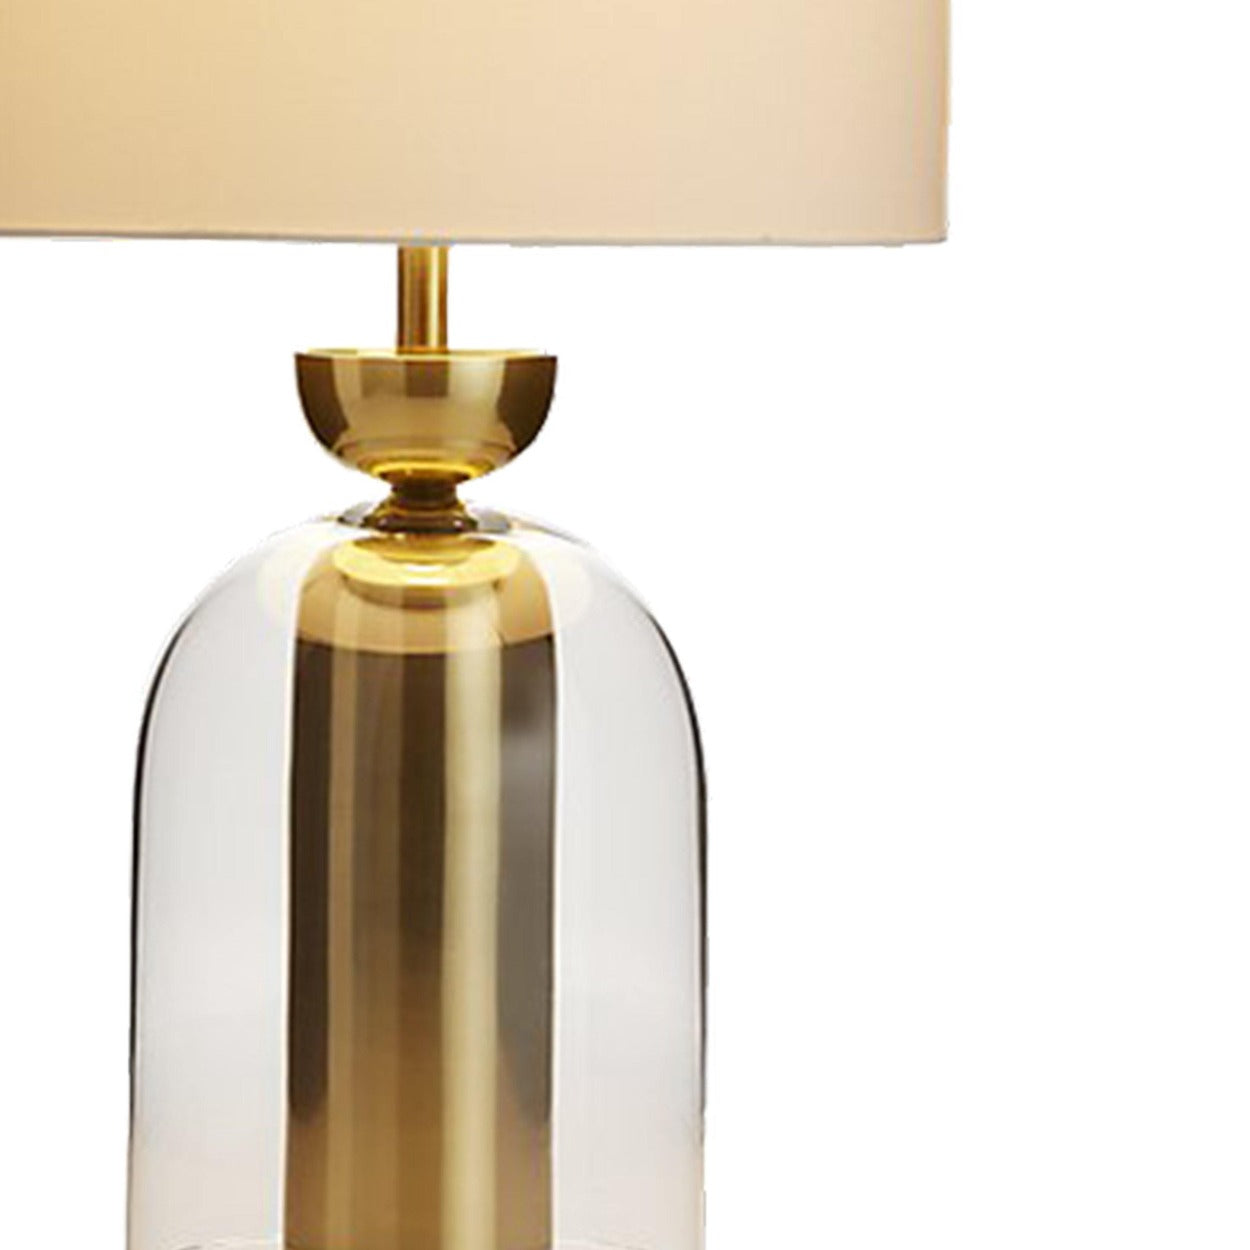 BELLJAR GLASS AND METAL CONTEMPORARY TABLE LAMP - Ankur Lighting